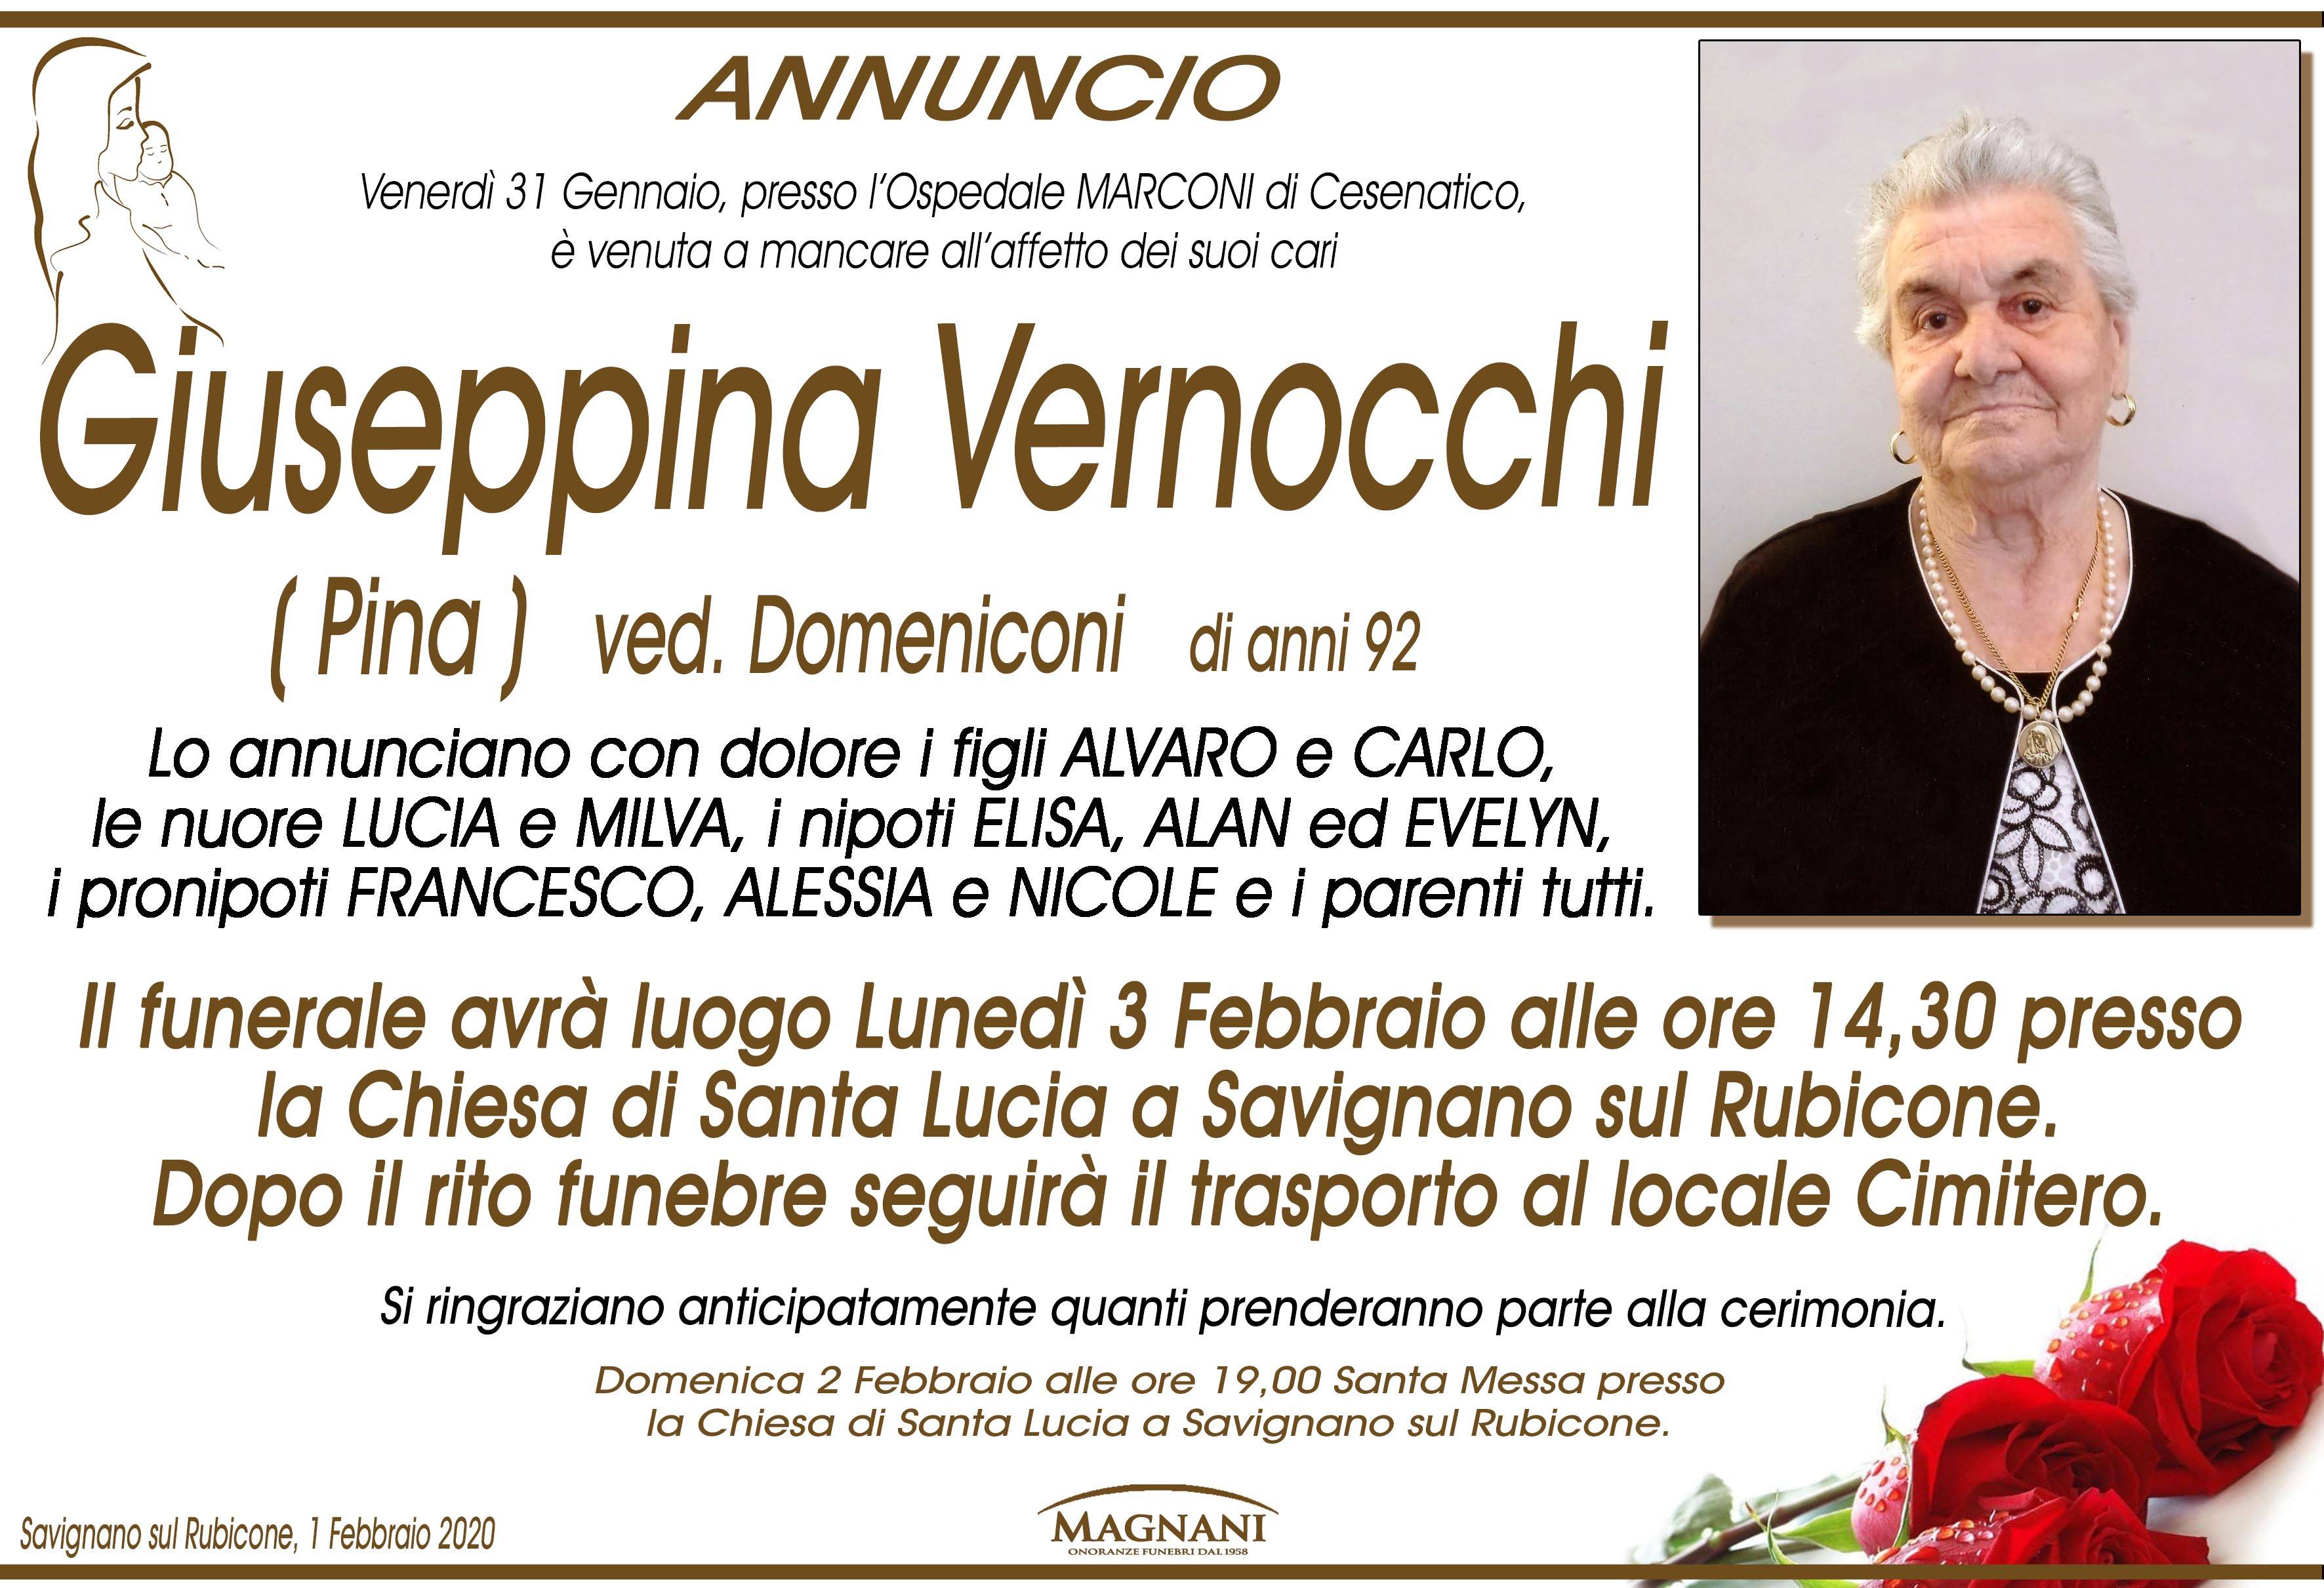 Giuseppina Vernocchi (Pina)